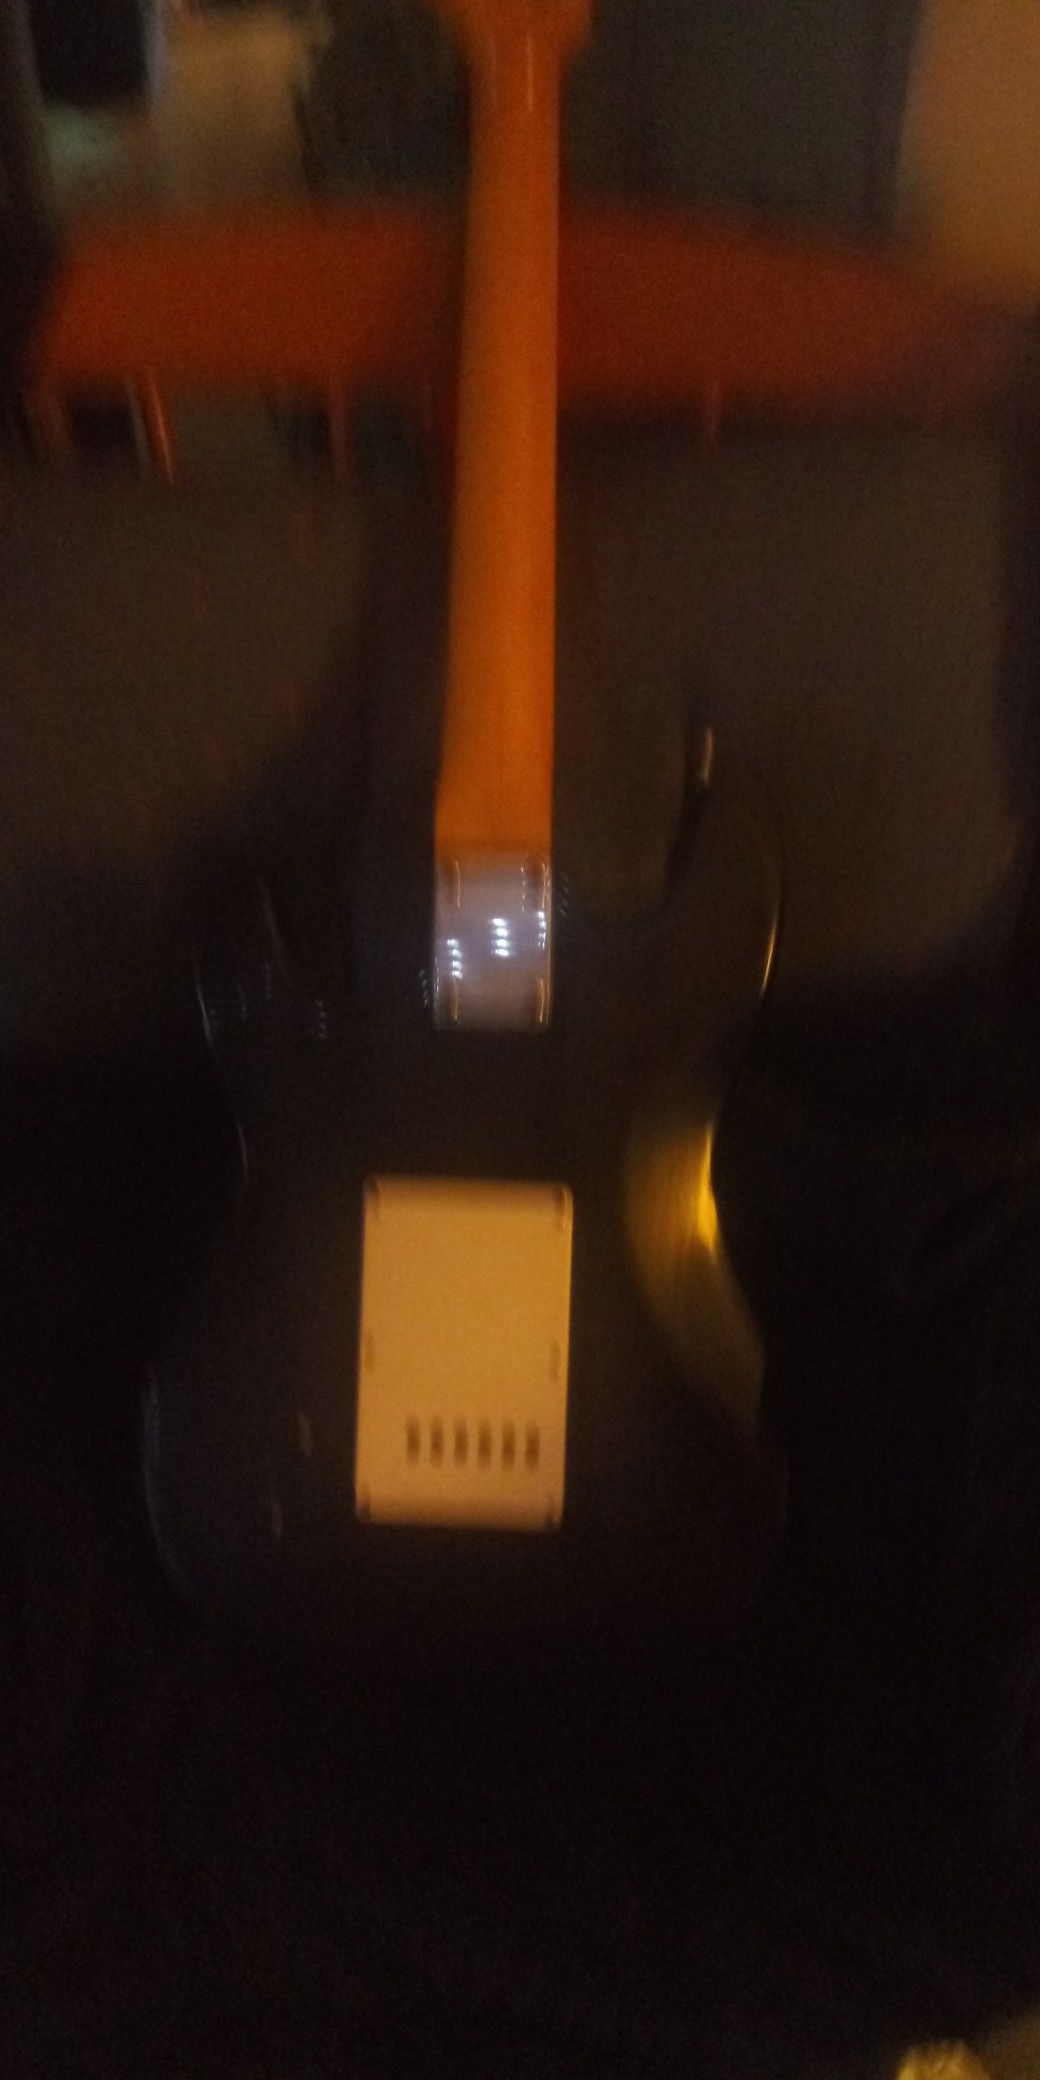 Kona electric guitar